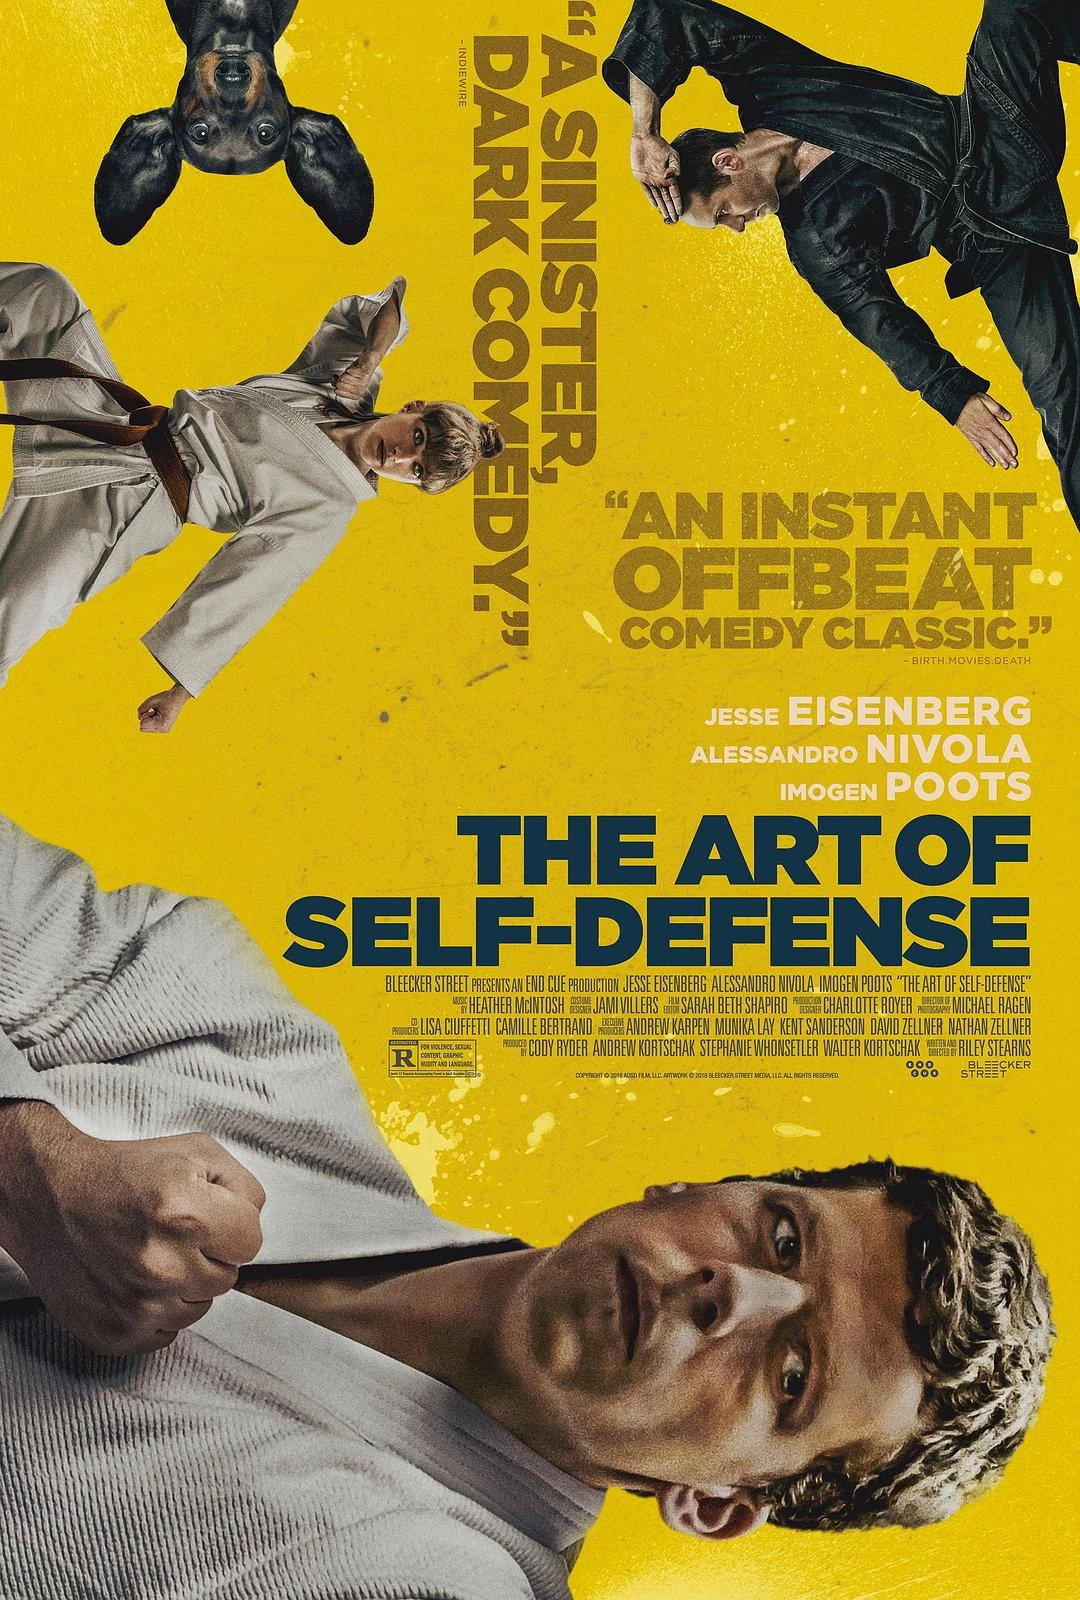 自卫艺术 蓝光原盘下载+高清MKV版 2019 The Art of Self-Defense 33.5G